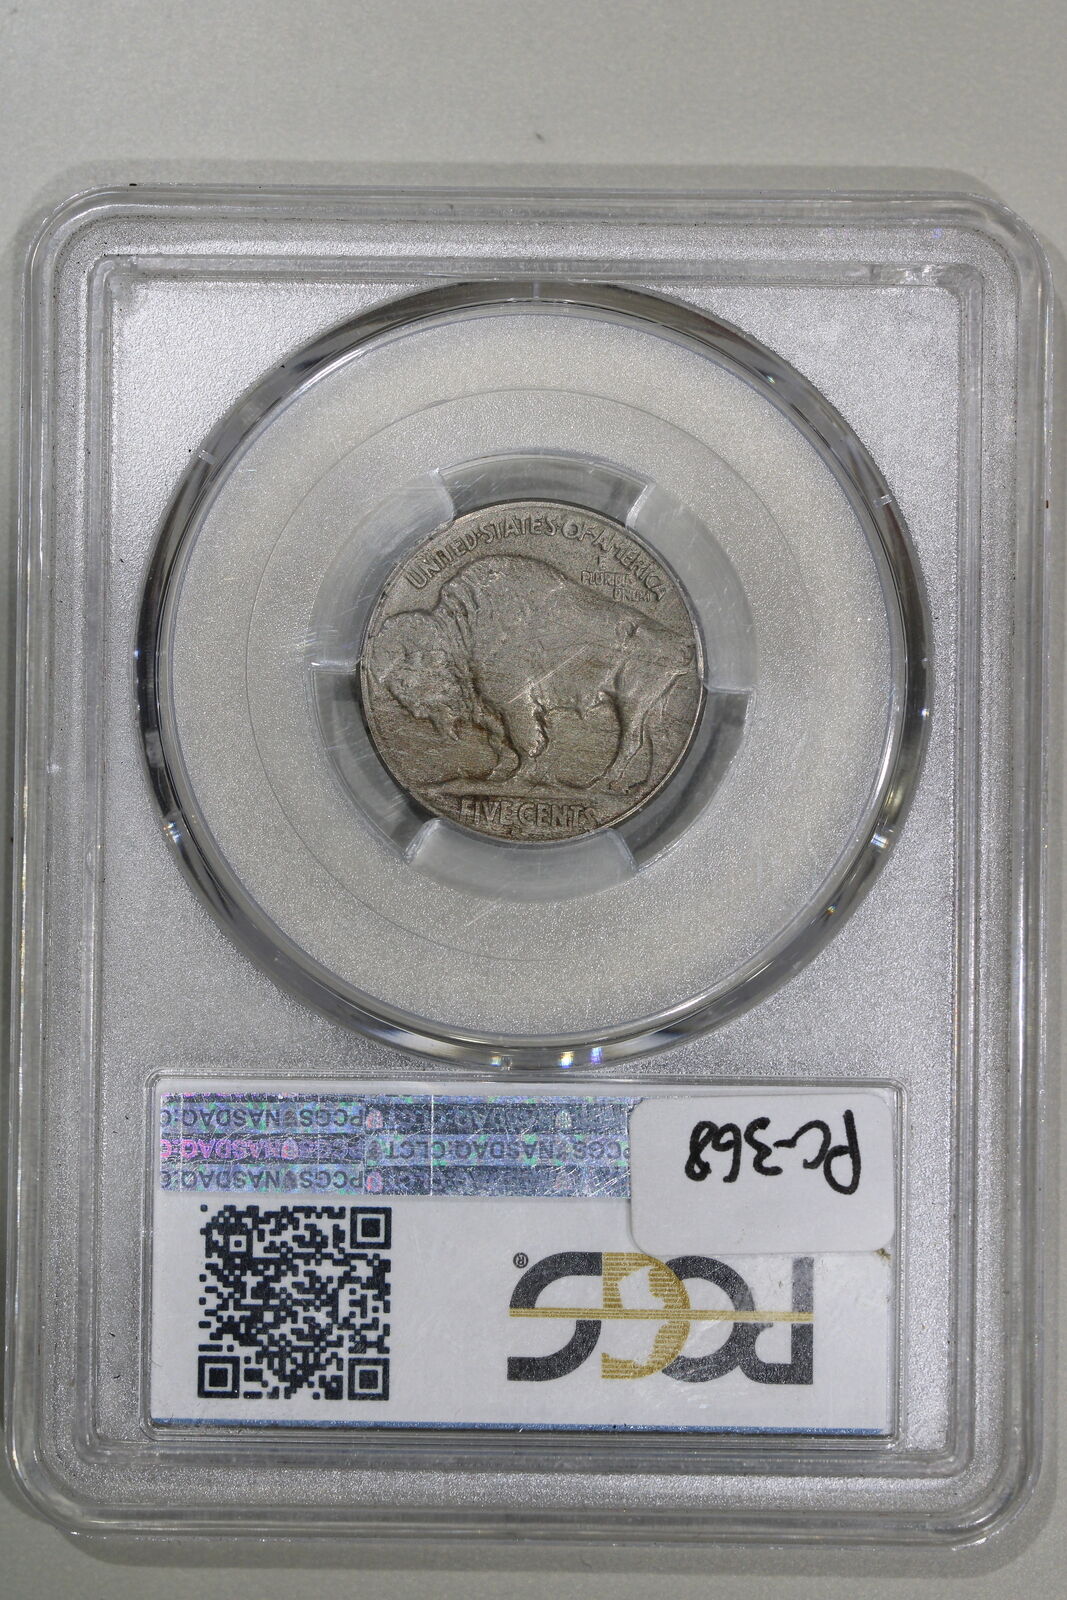 1928-S (MS63) Buffalo Nickel 5c PCGS Graded Coin